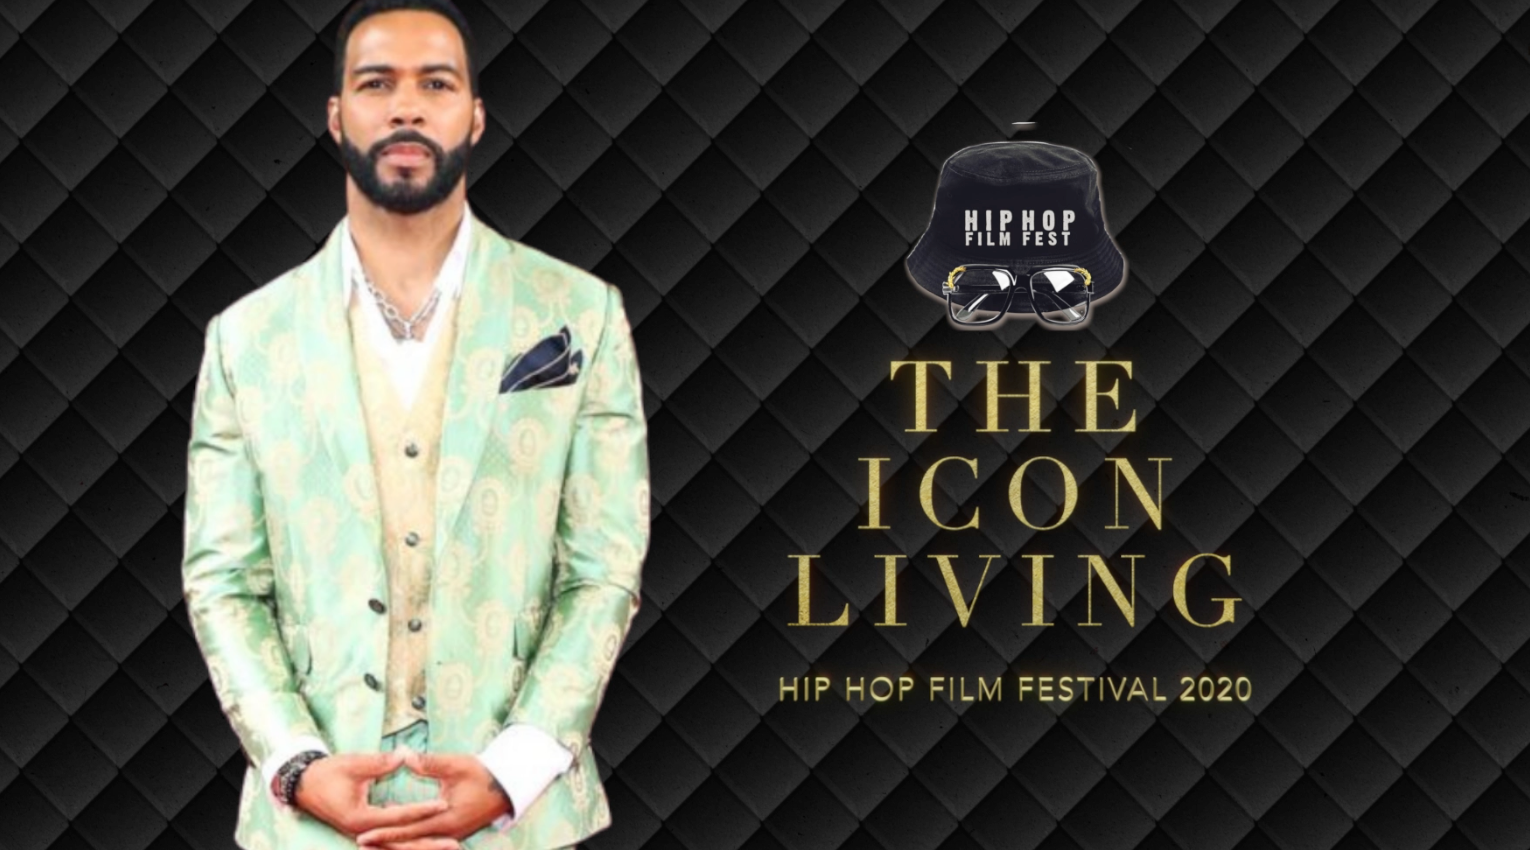 The Hip Hop Film Festival Announces Its Line Up For The 2020 Season by Harlem Film House Harlem Film House Medium